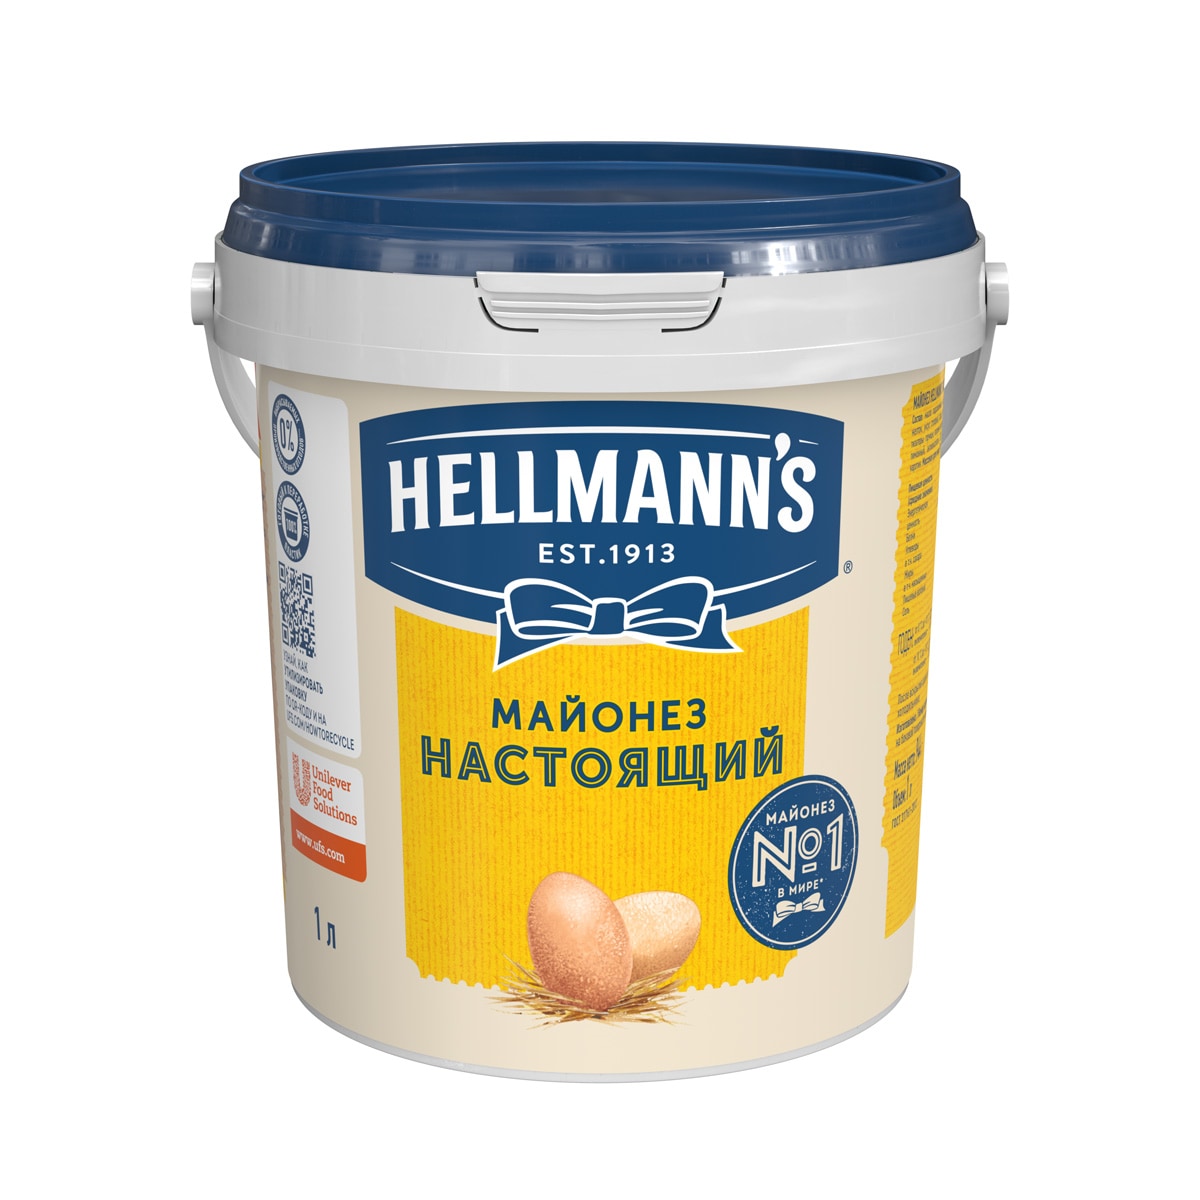 HELLMANN'S Майонез Настоящий (1л) - Hellmann’s Настоящий — для авторских блюд любой сложности.